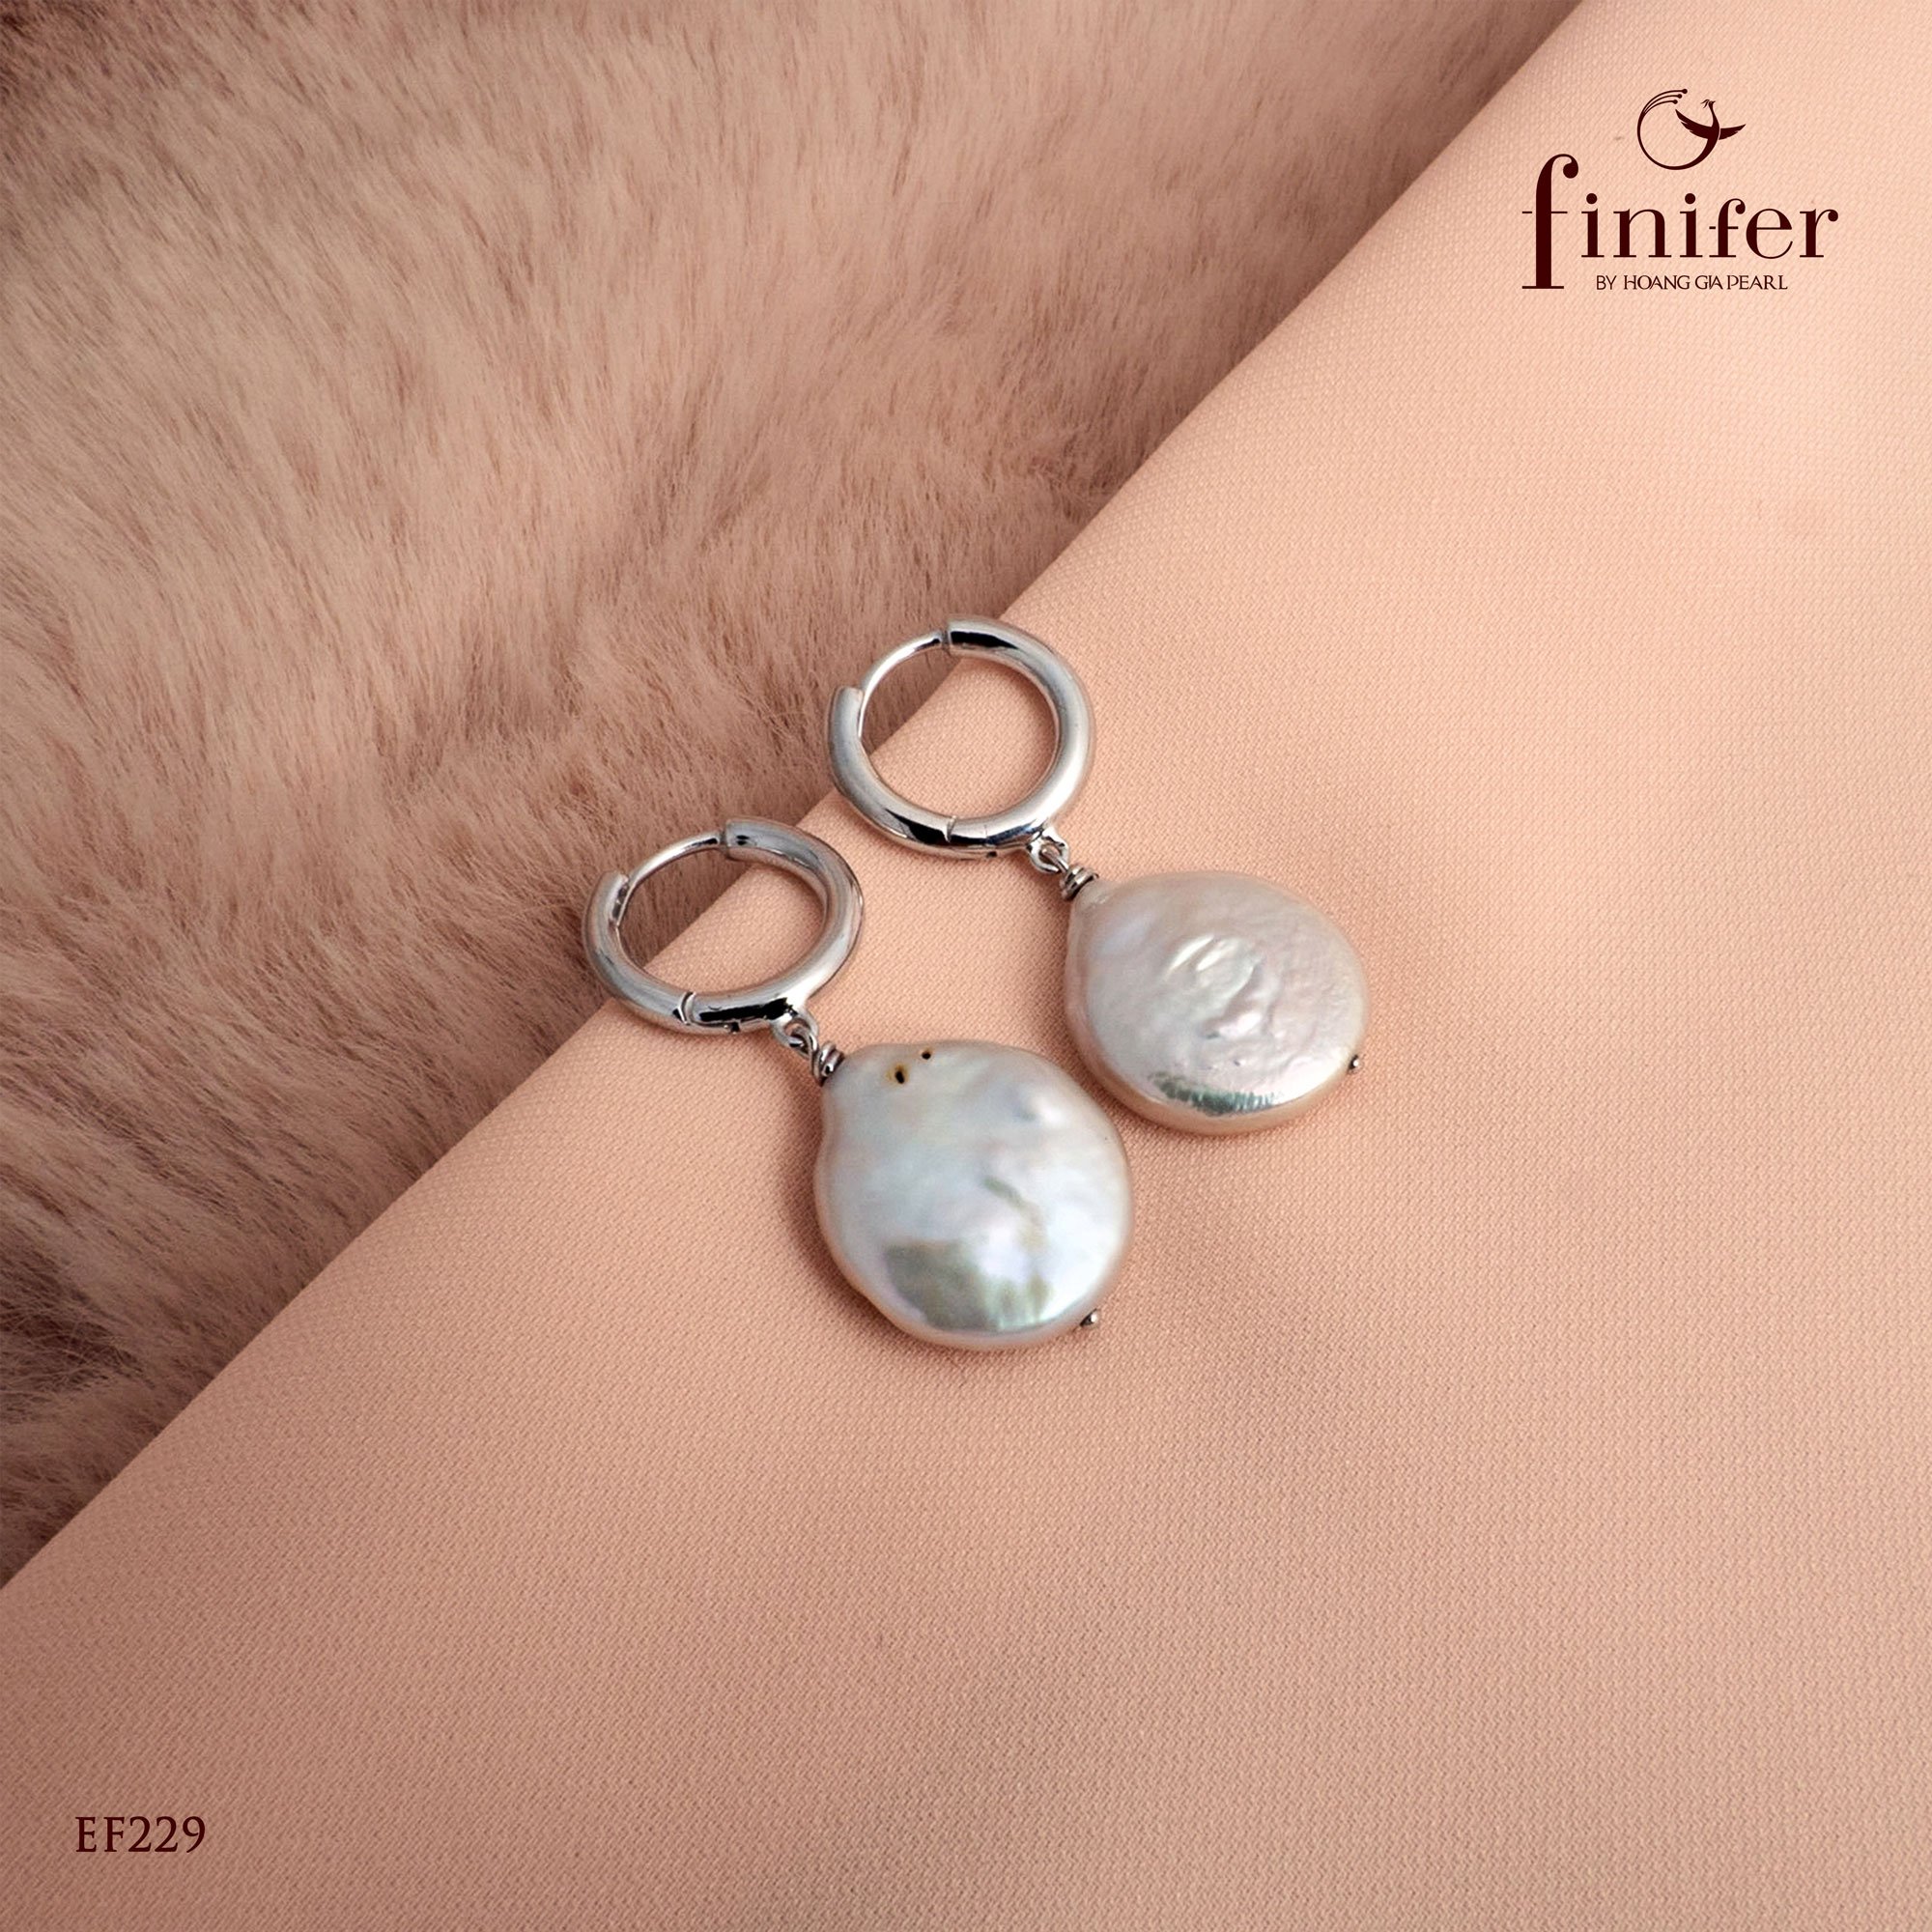 Bông tai ngọc trai EF229 Finifer (L)